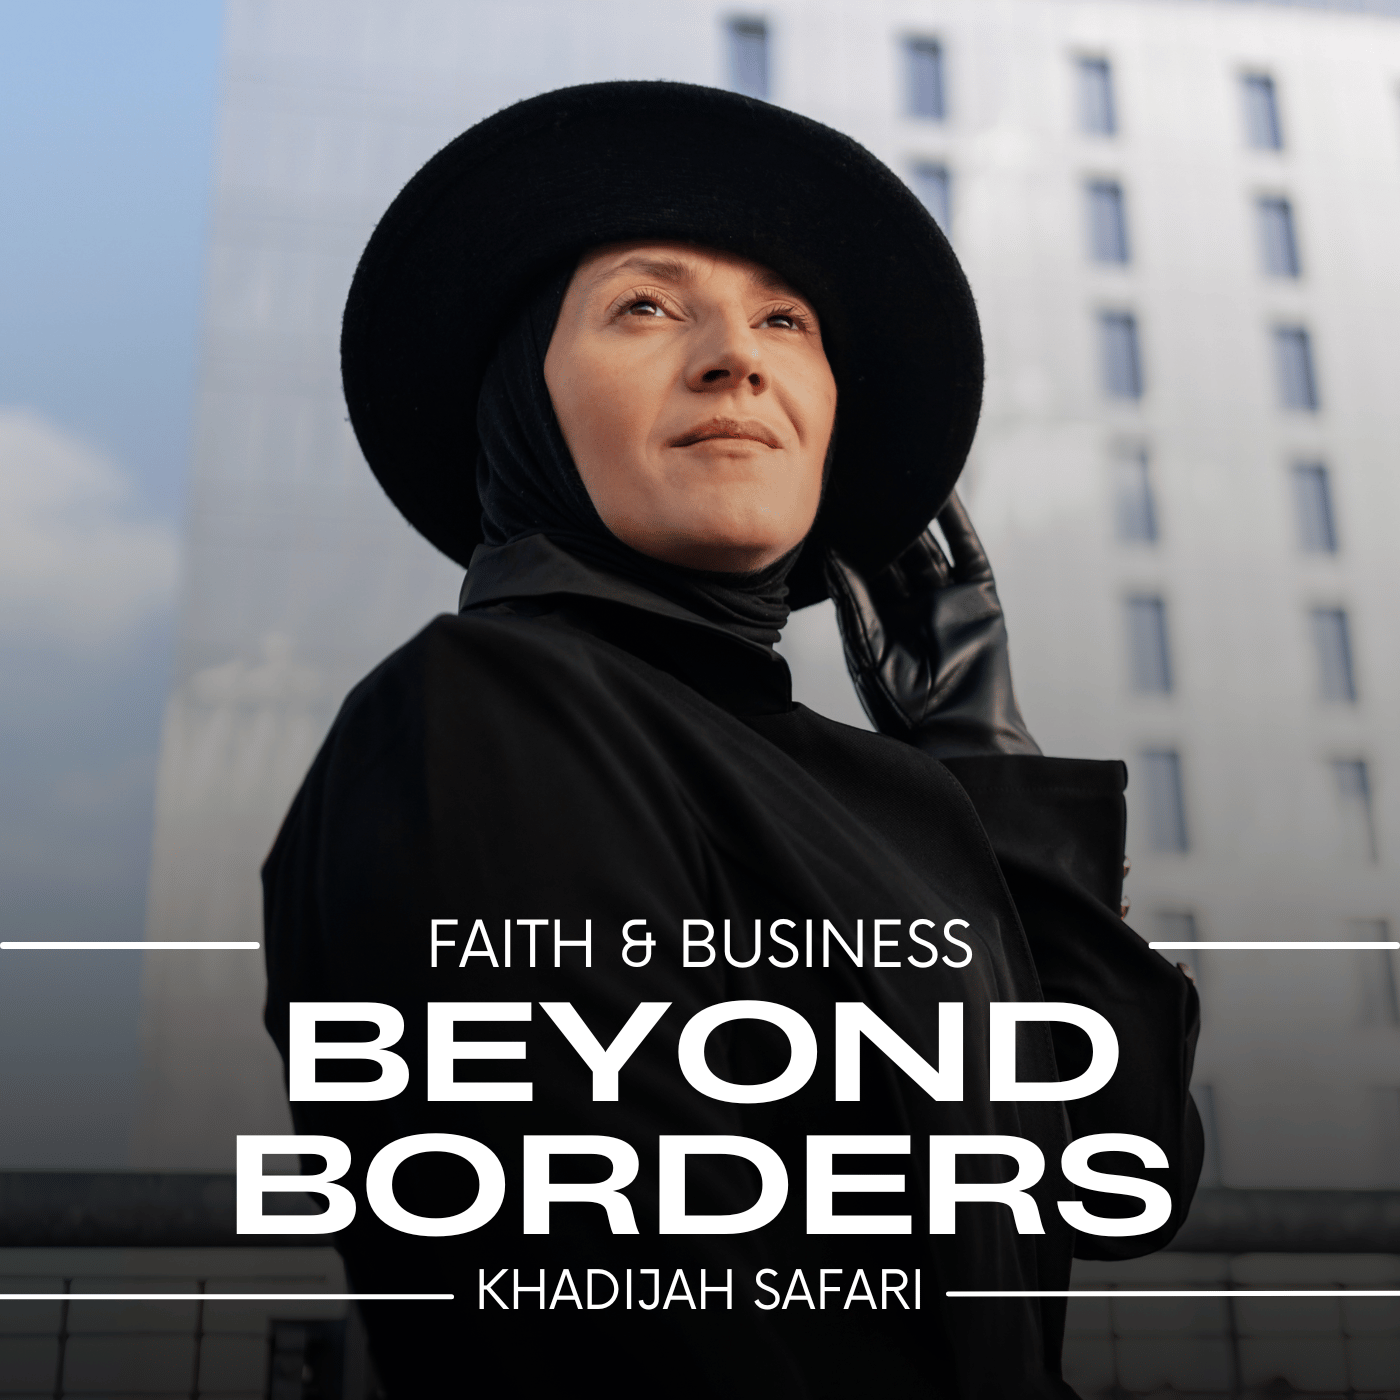 Beyond Borders: Faith and Business by Khadijah Safari